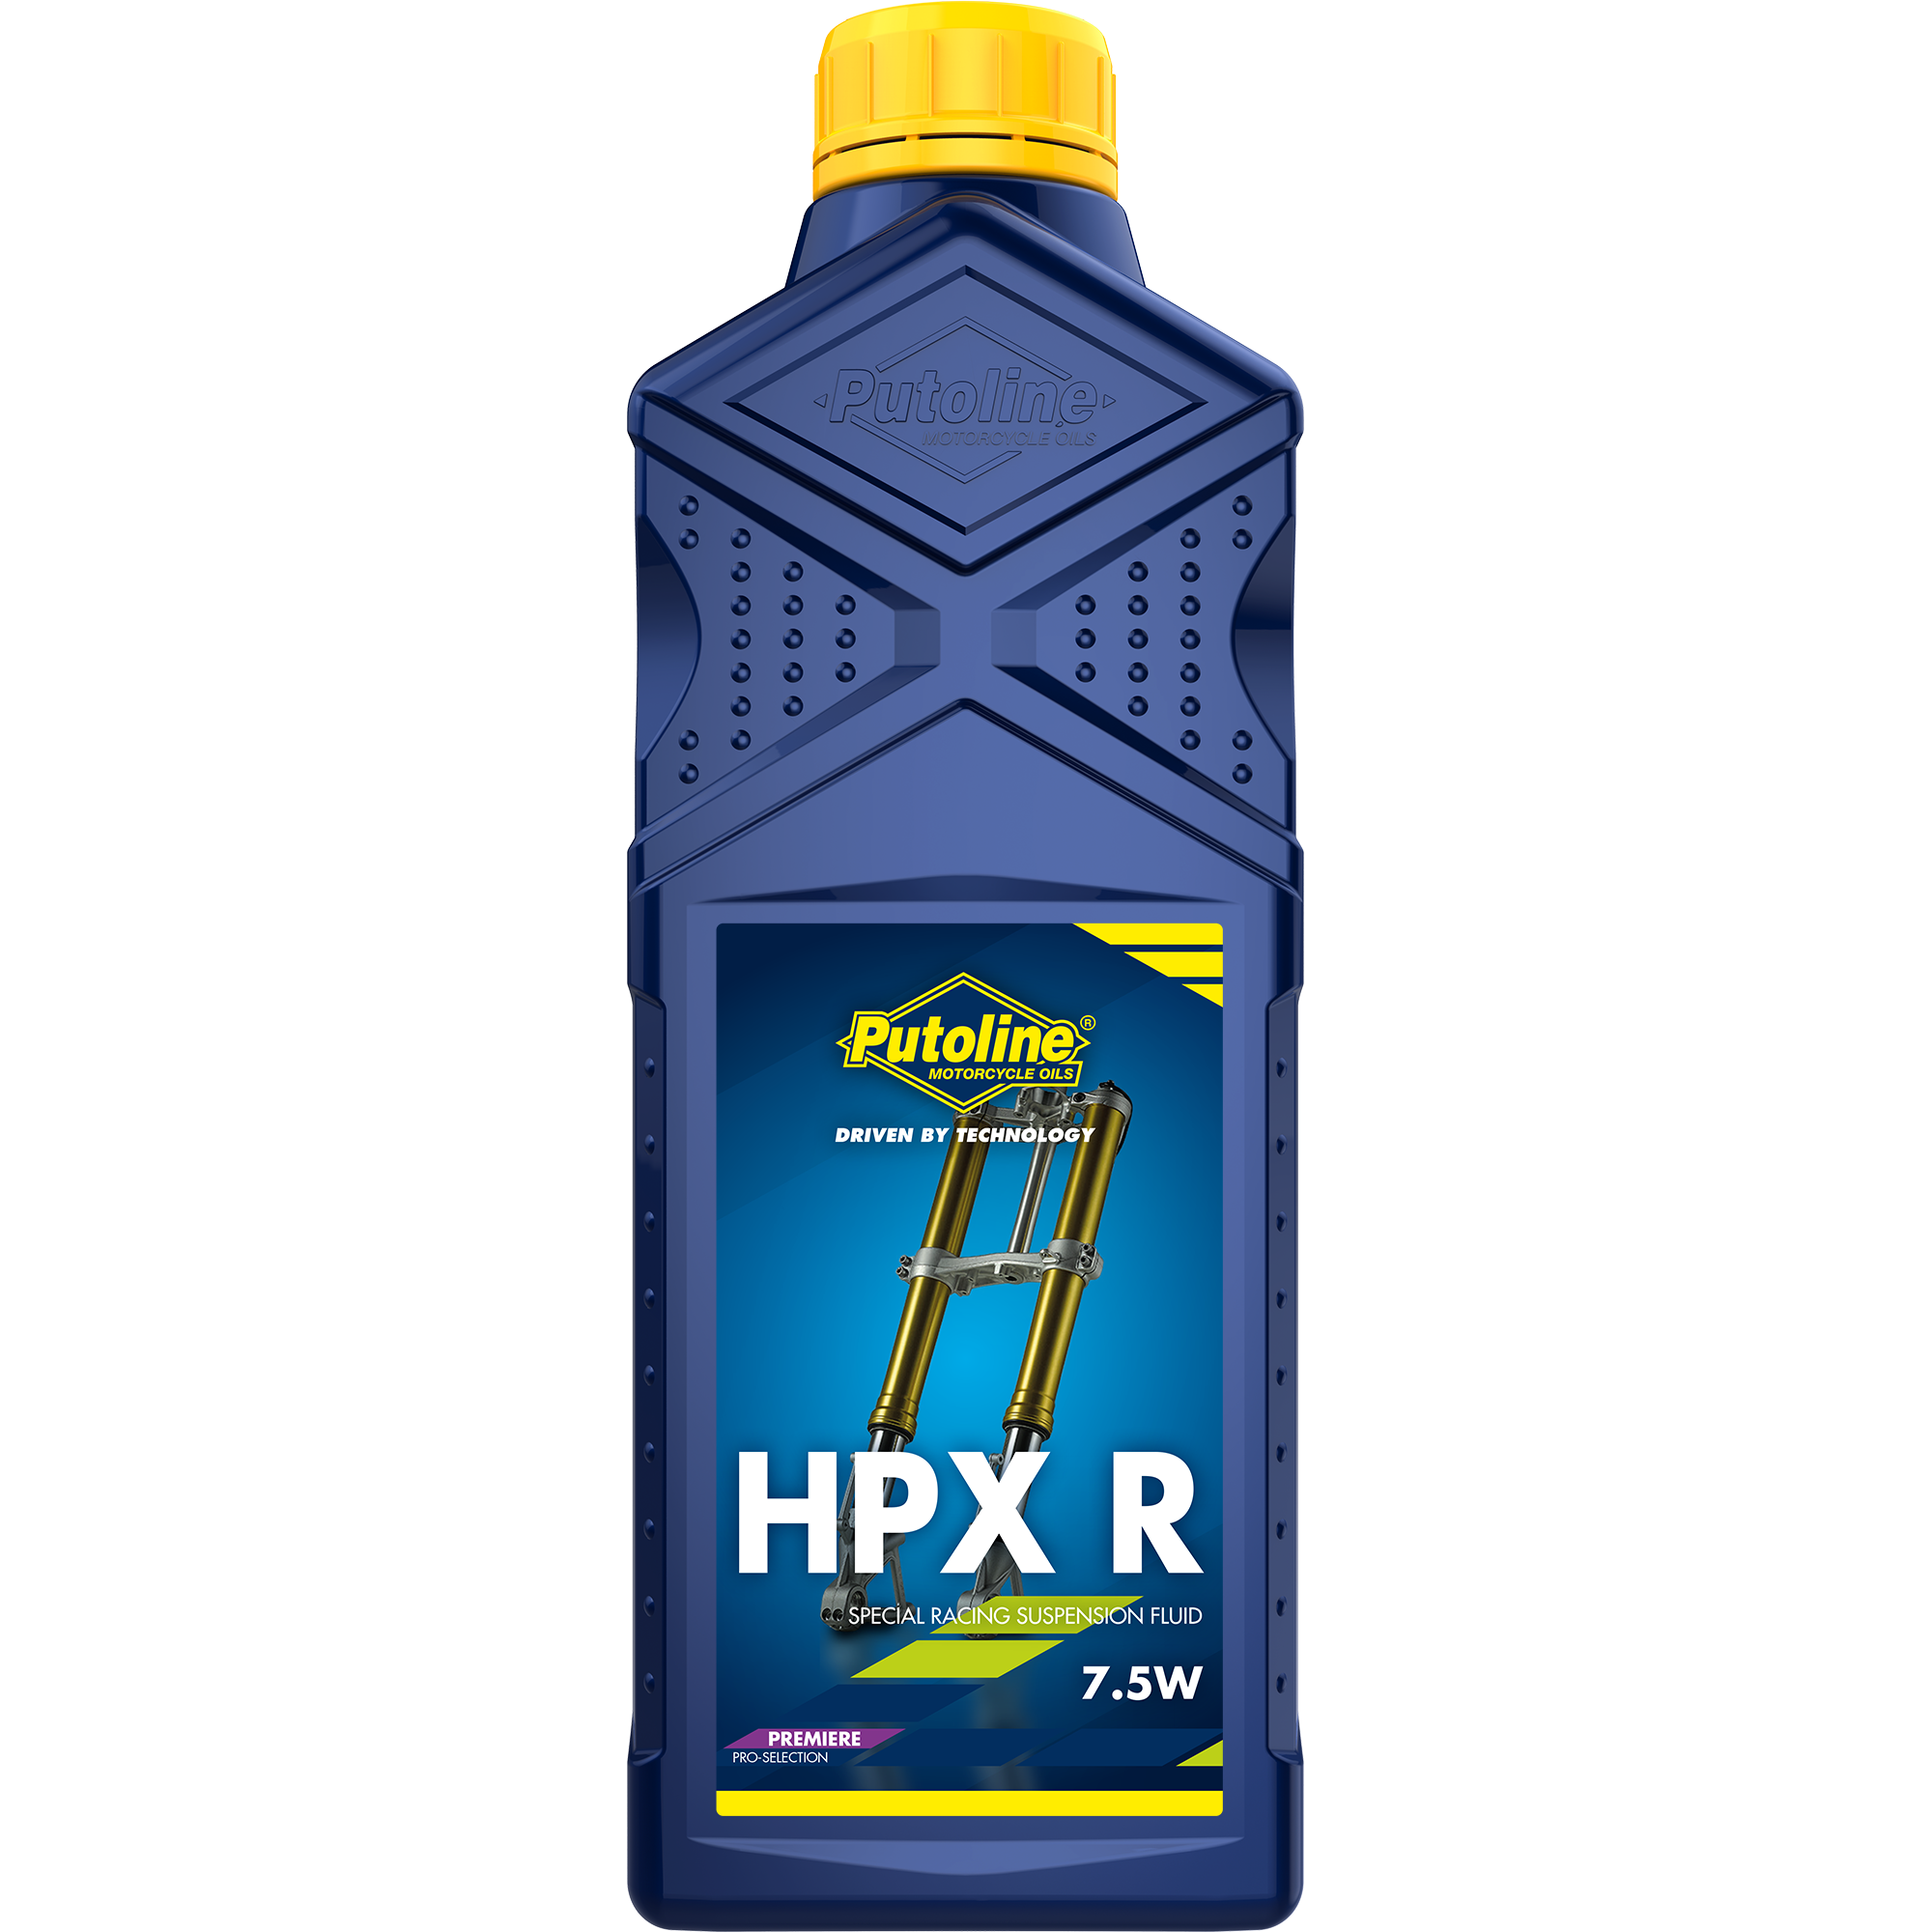 Putoline HPX R 7.5W, 12 x 1 lt detail 2